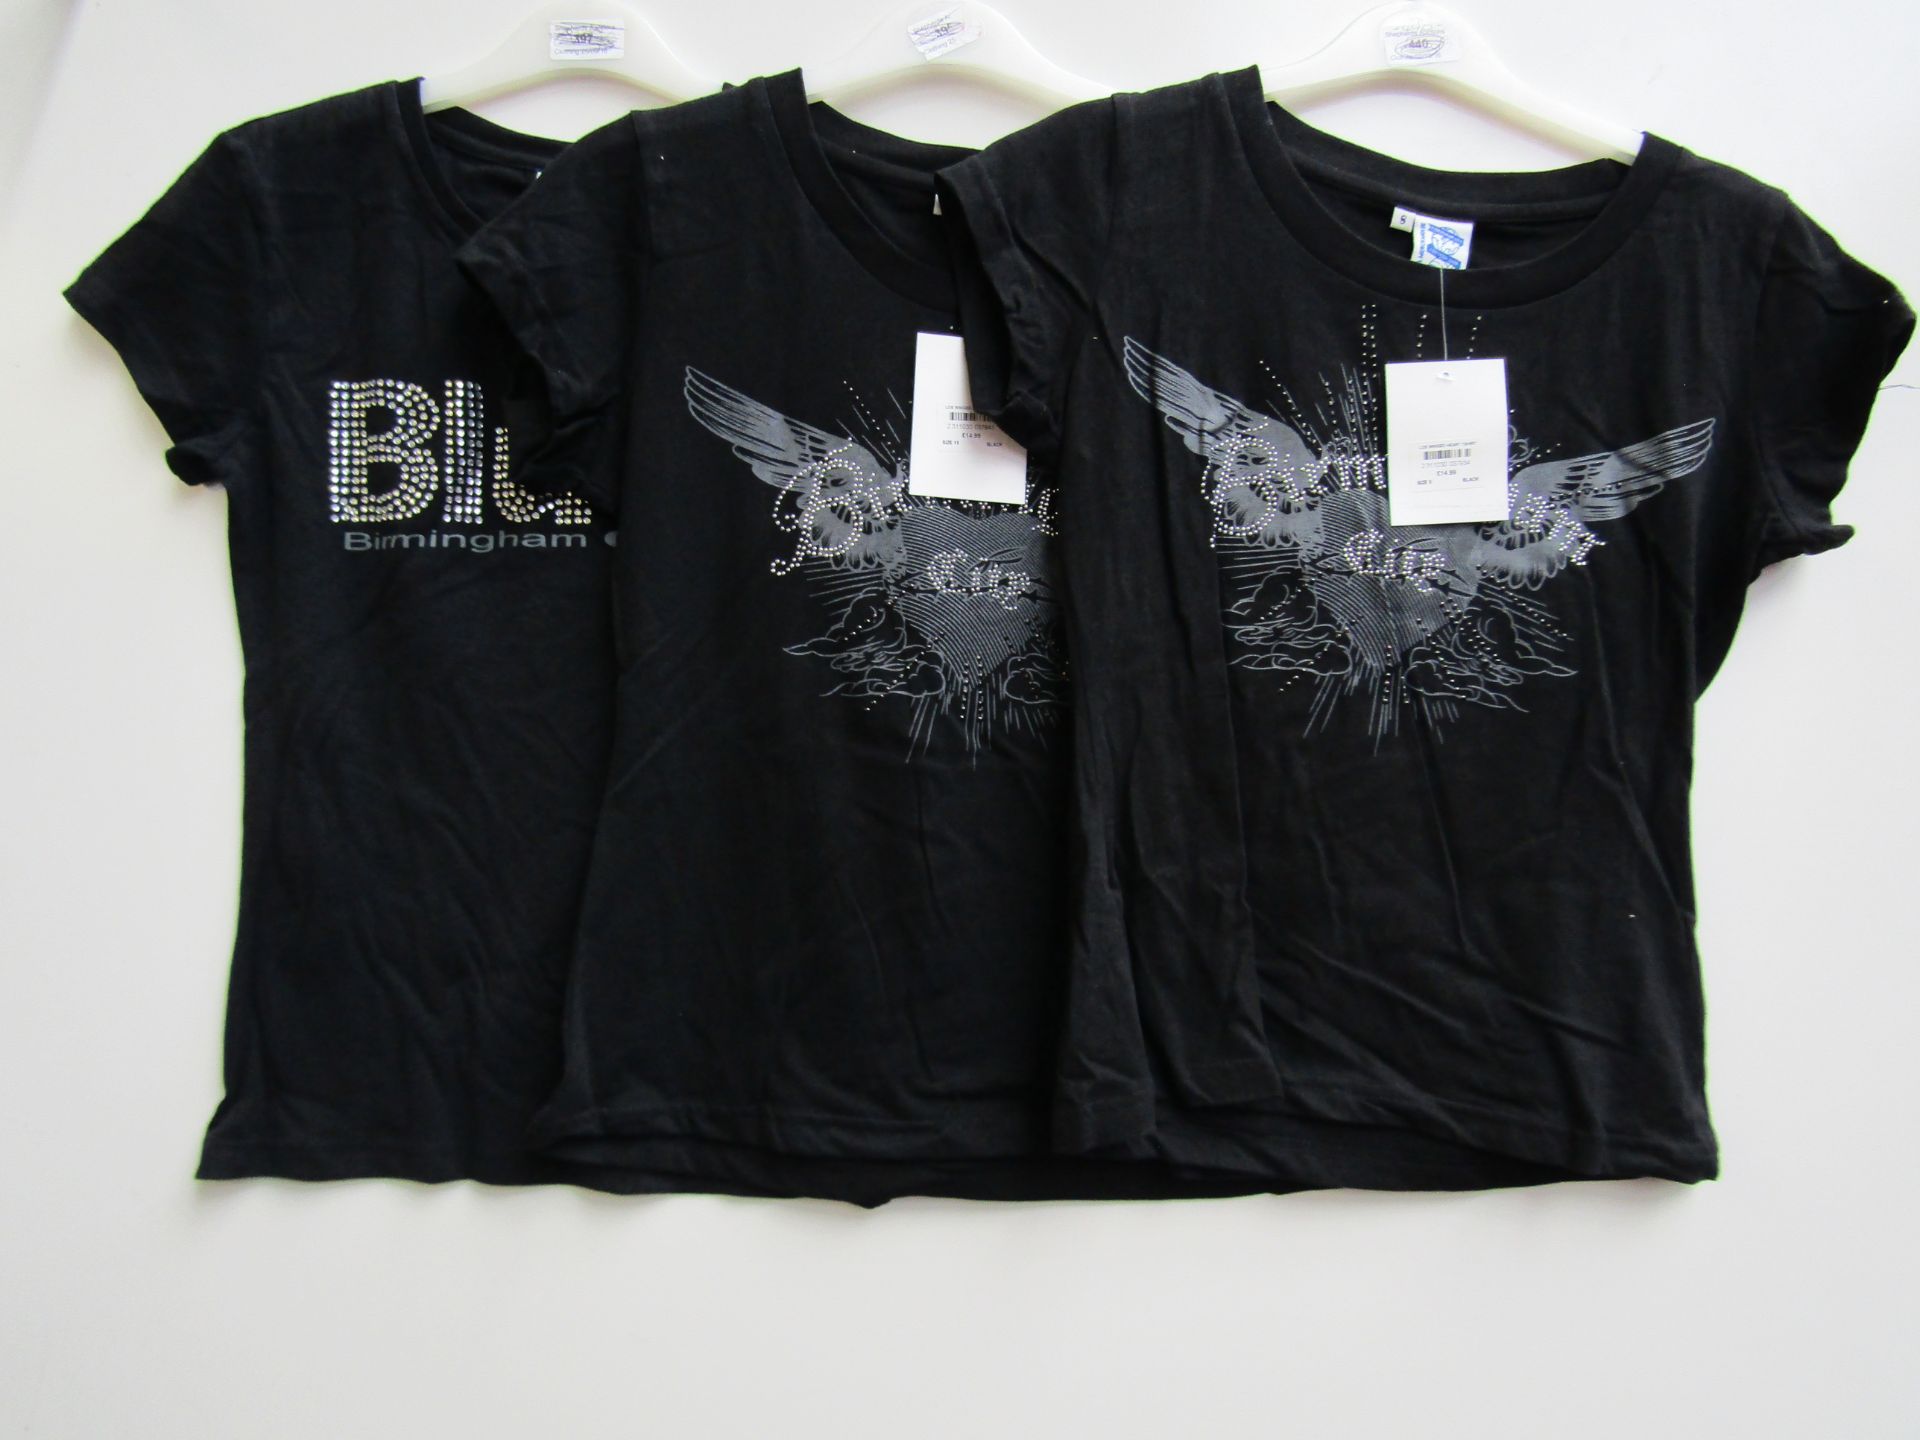 3x ladies Birmingham City T-Shirts 2x size 8 and 1x size 10